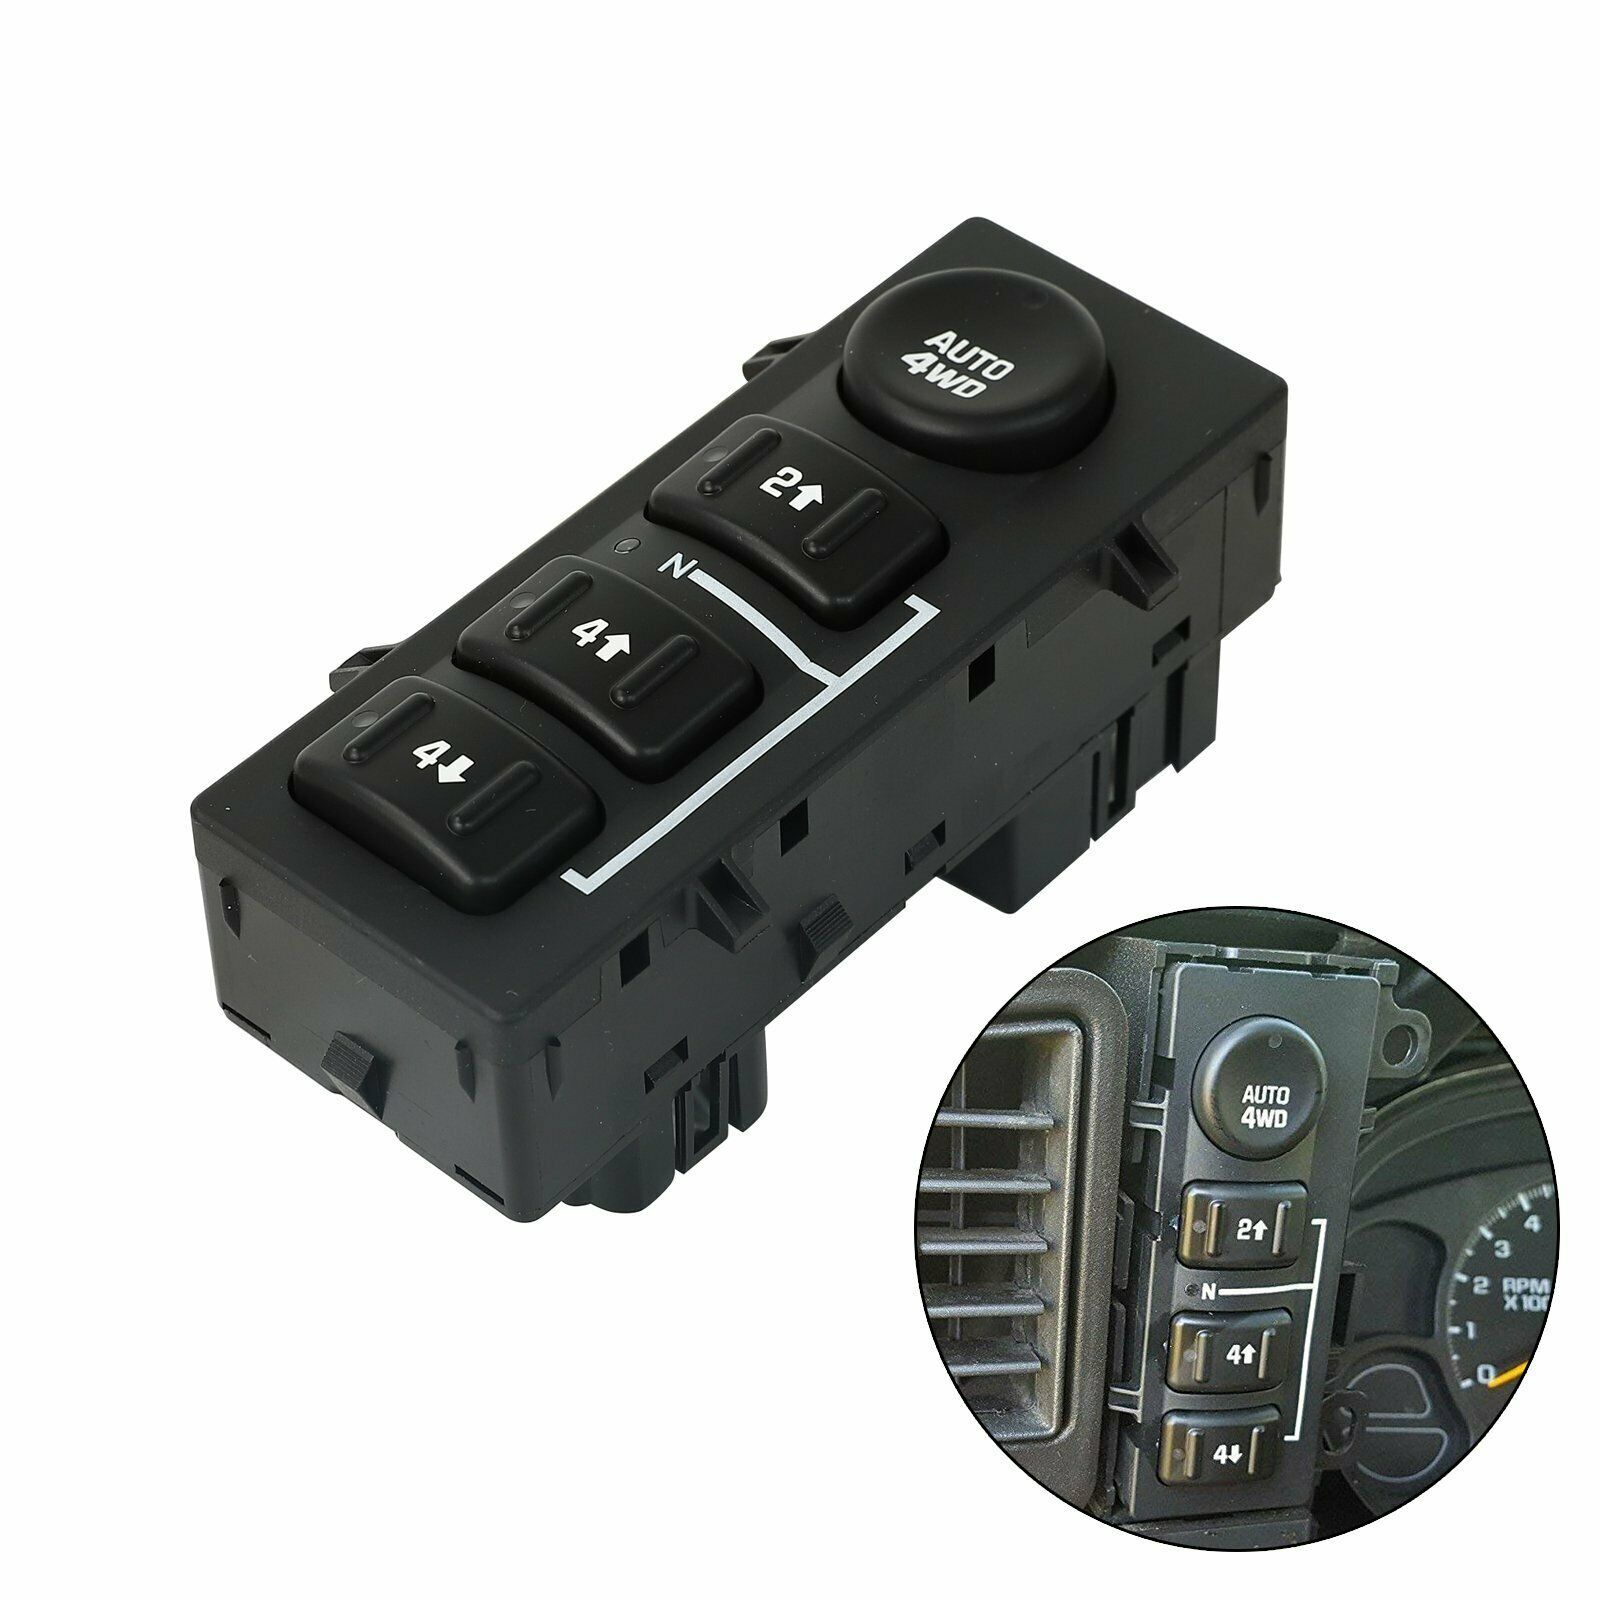 4x4 4-Wheel Drive Selector Switch For GMC Sierra Tahoe Yukon Silverado Suburban